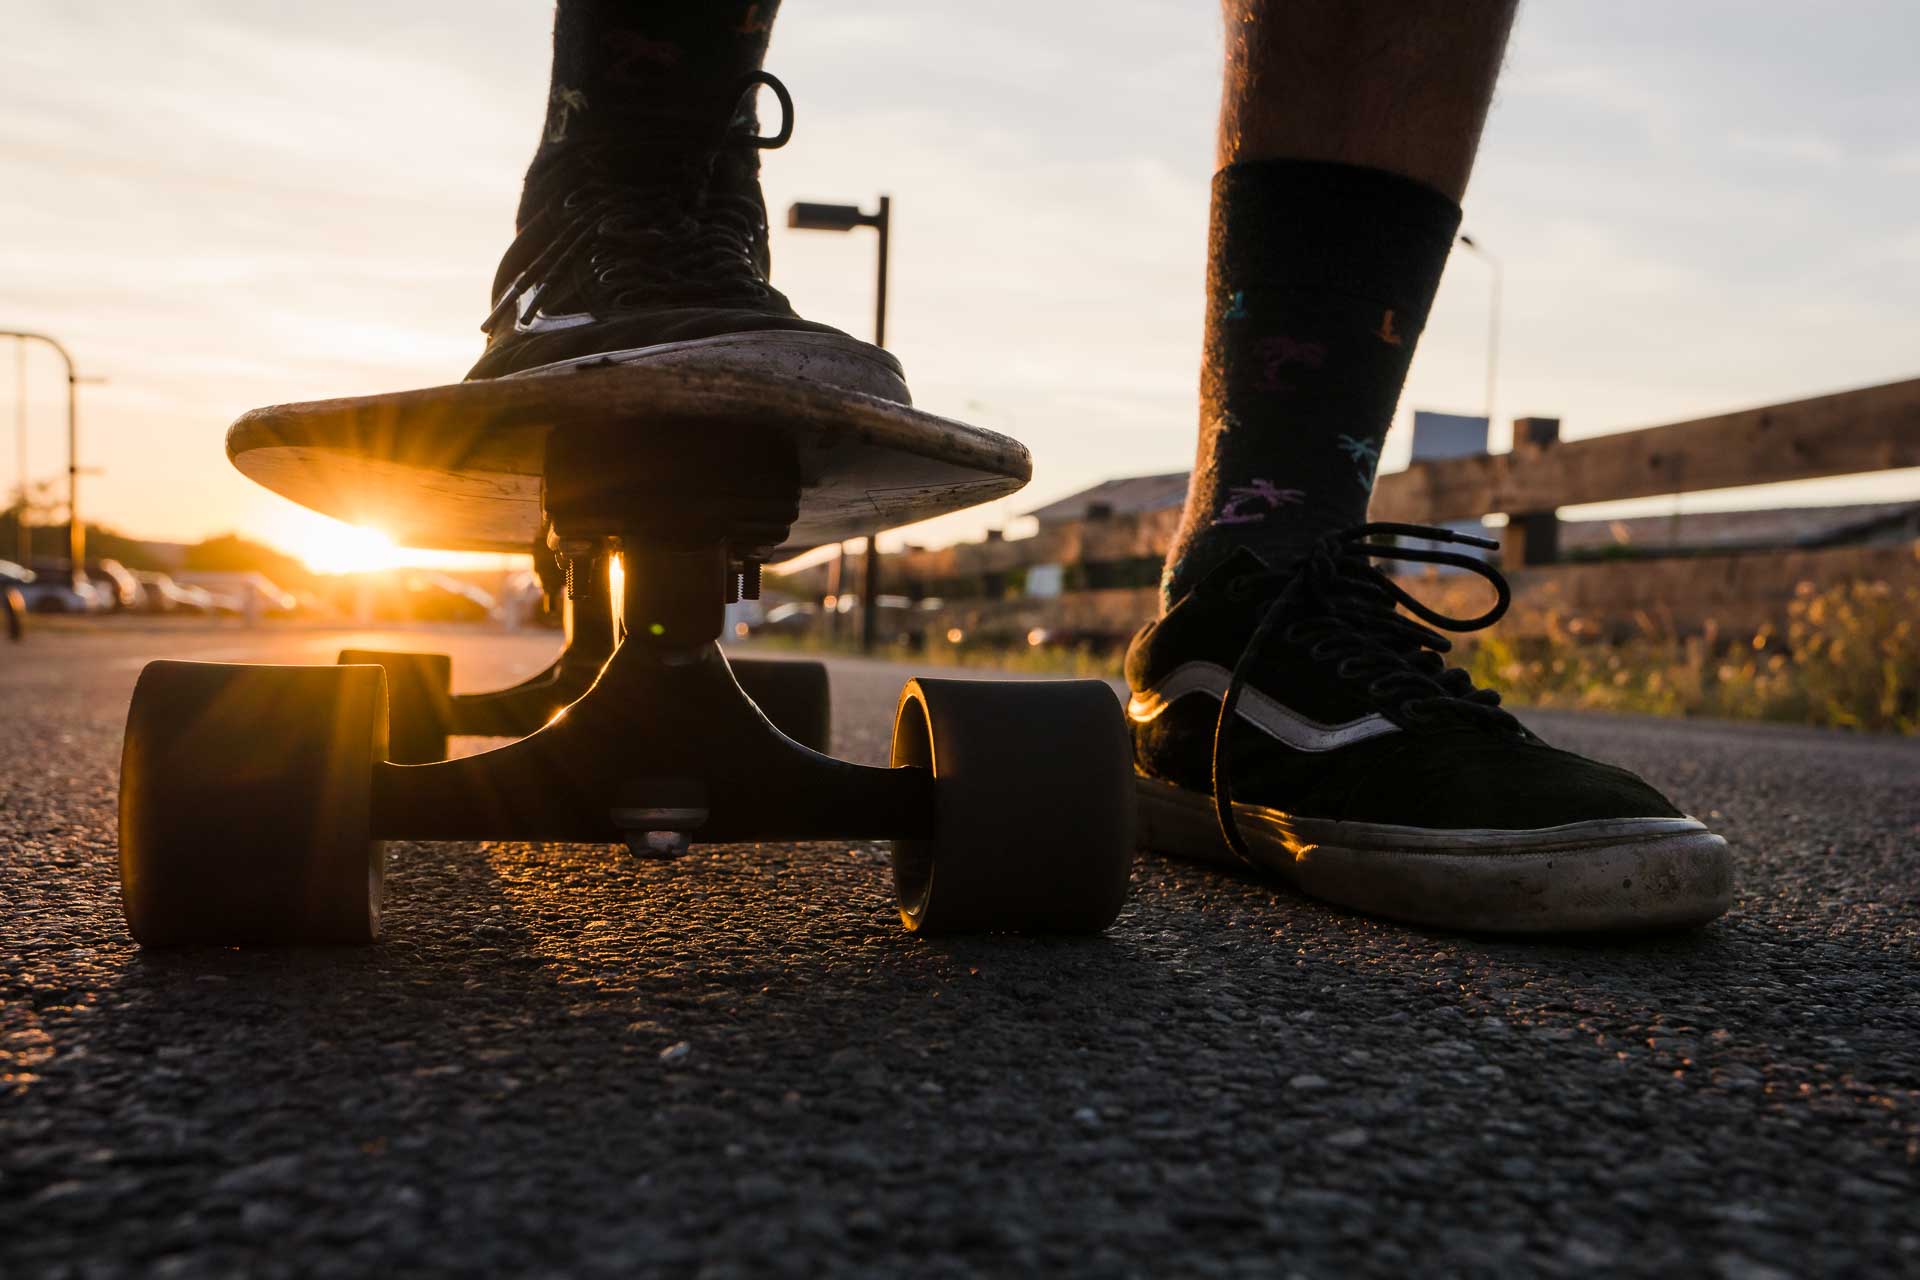 Skateboard photoshoot